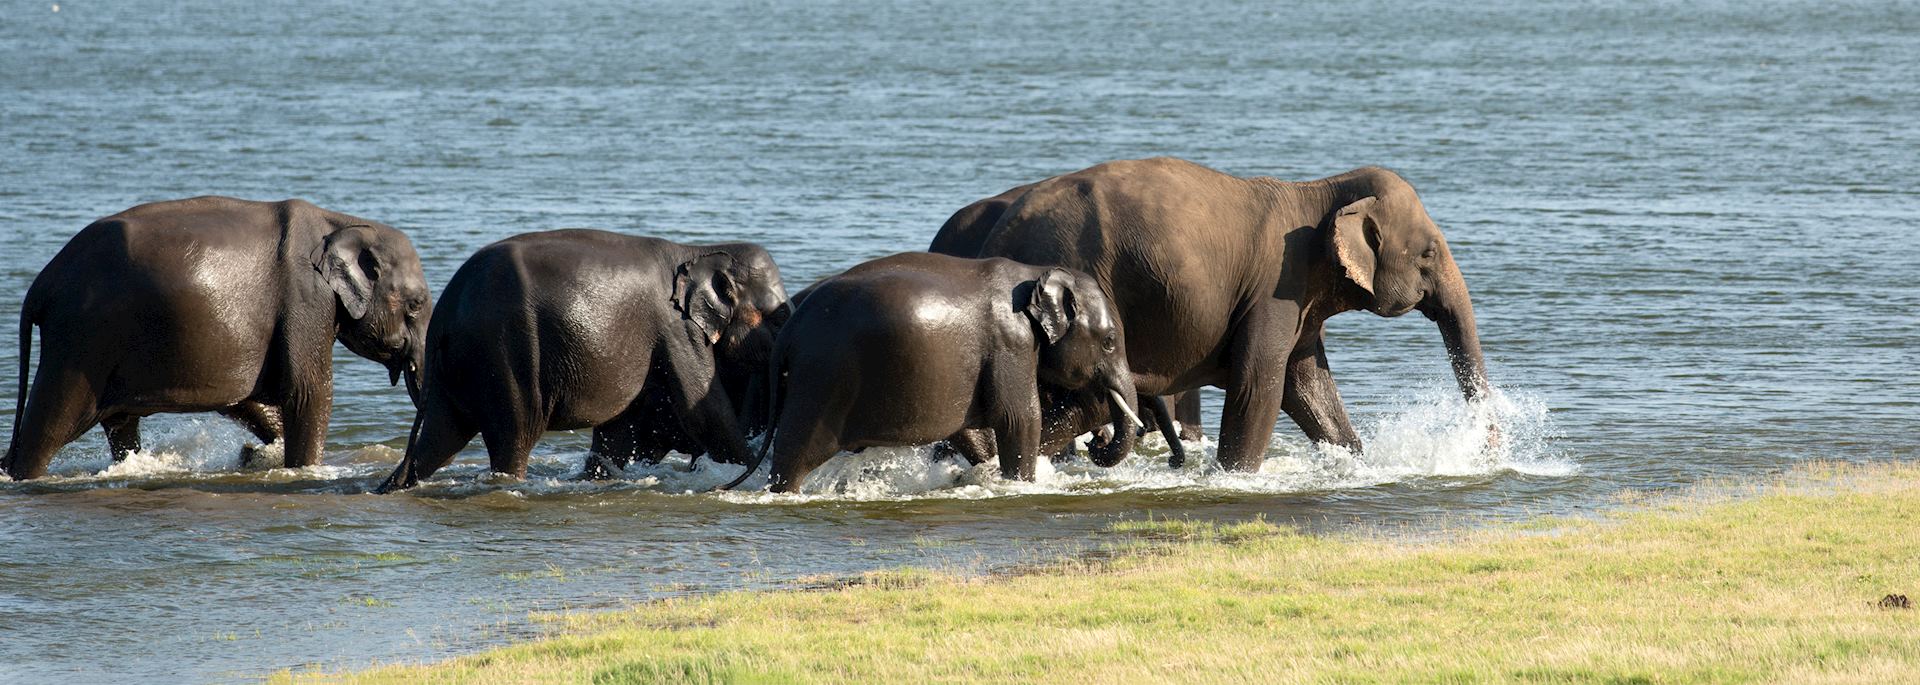 Elephants in the Minneriya National Park